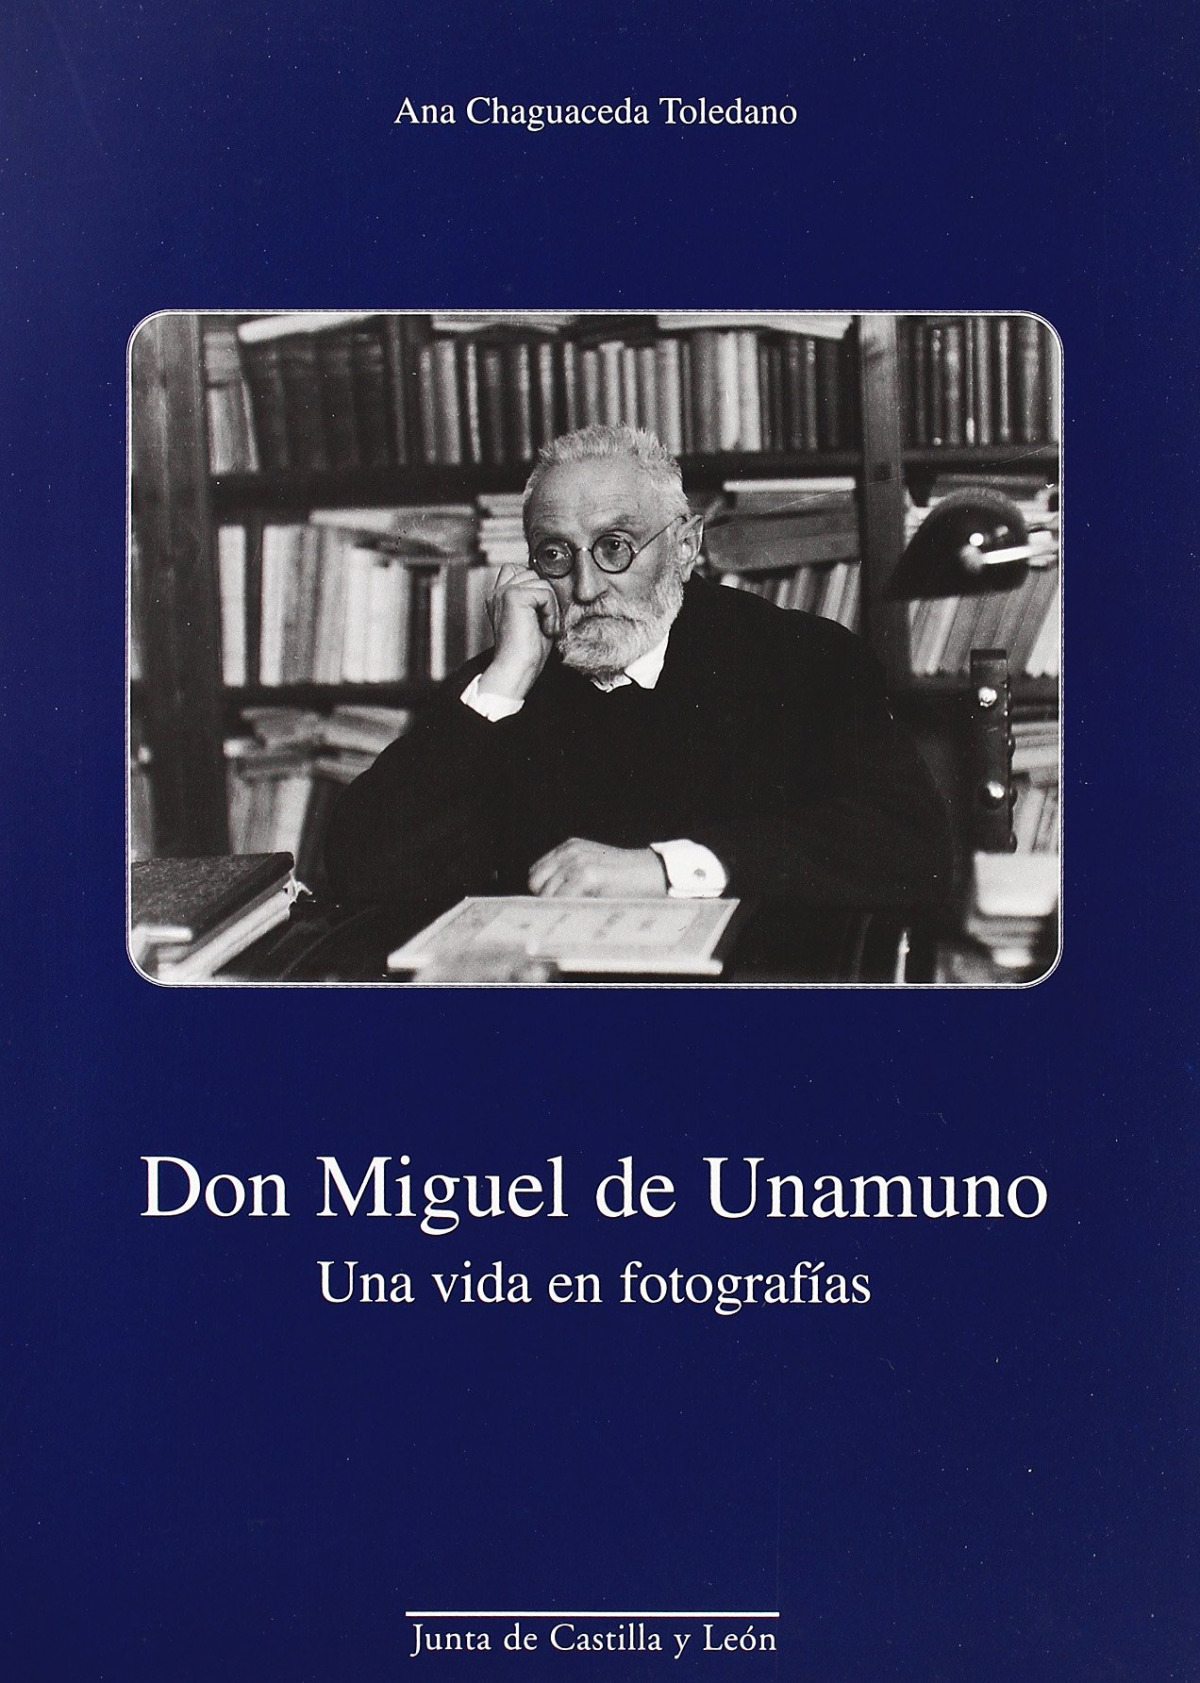 Don miguel de unamuno - Chaguaceda, Ana